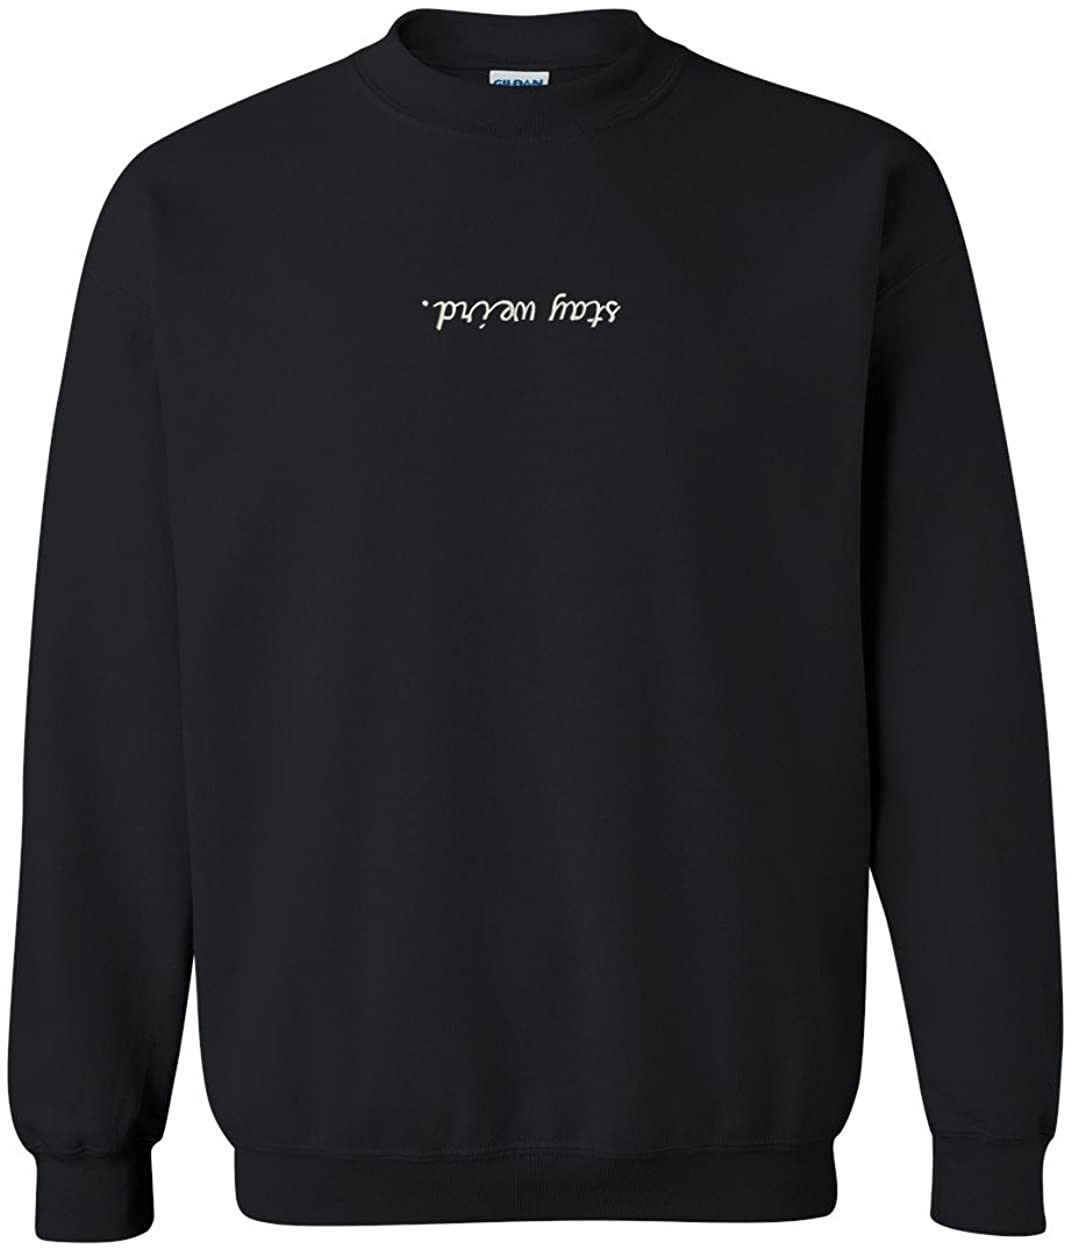 Trendy Apparel Shop Stay Weird Embroidered Crewneck Sweatshirt